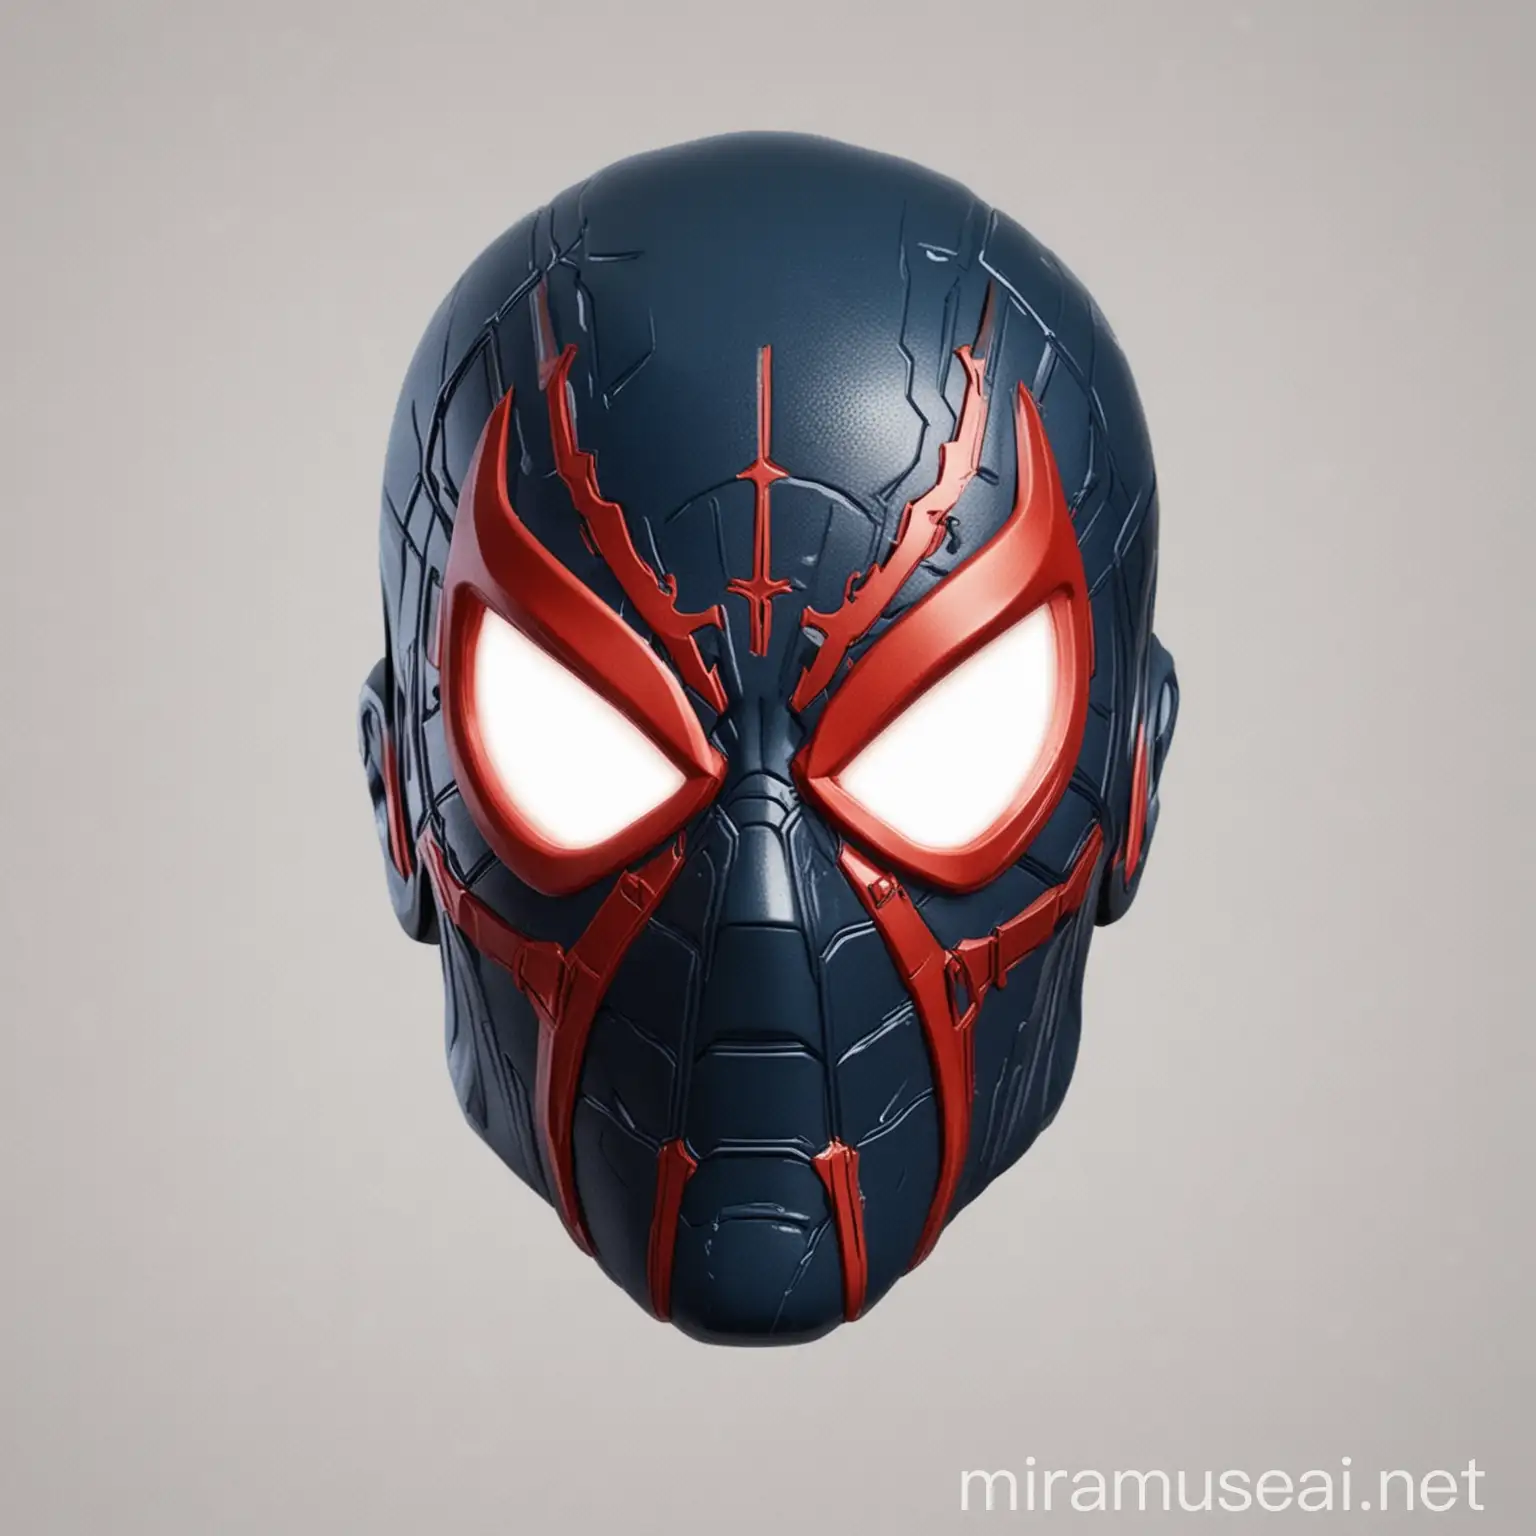 SpiderMan 2099 Head Emoji in Futuristic Urban Setting